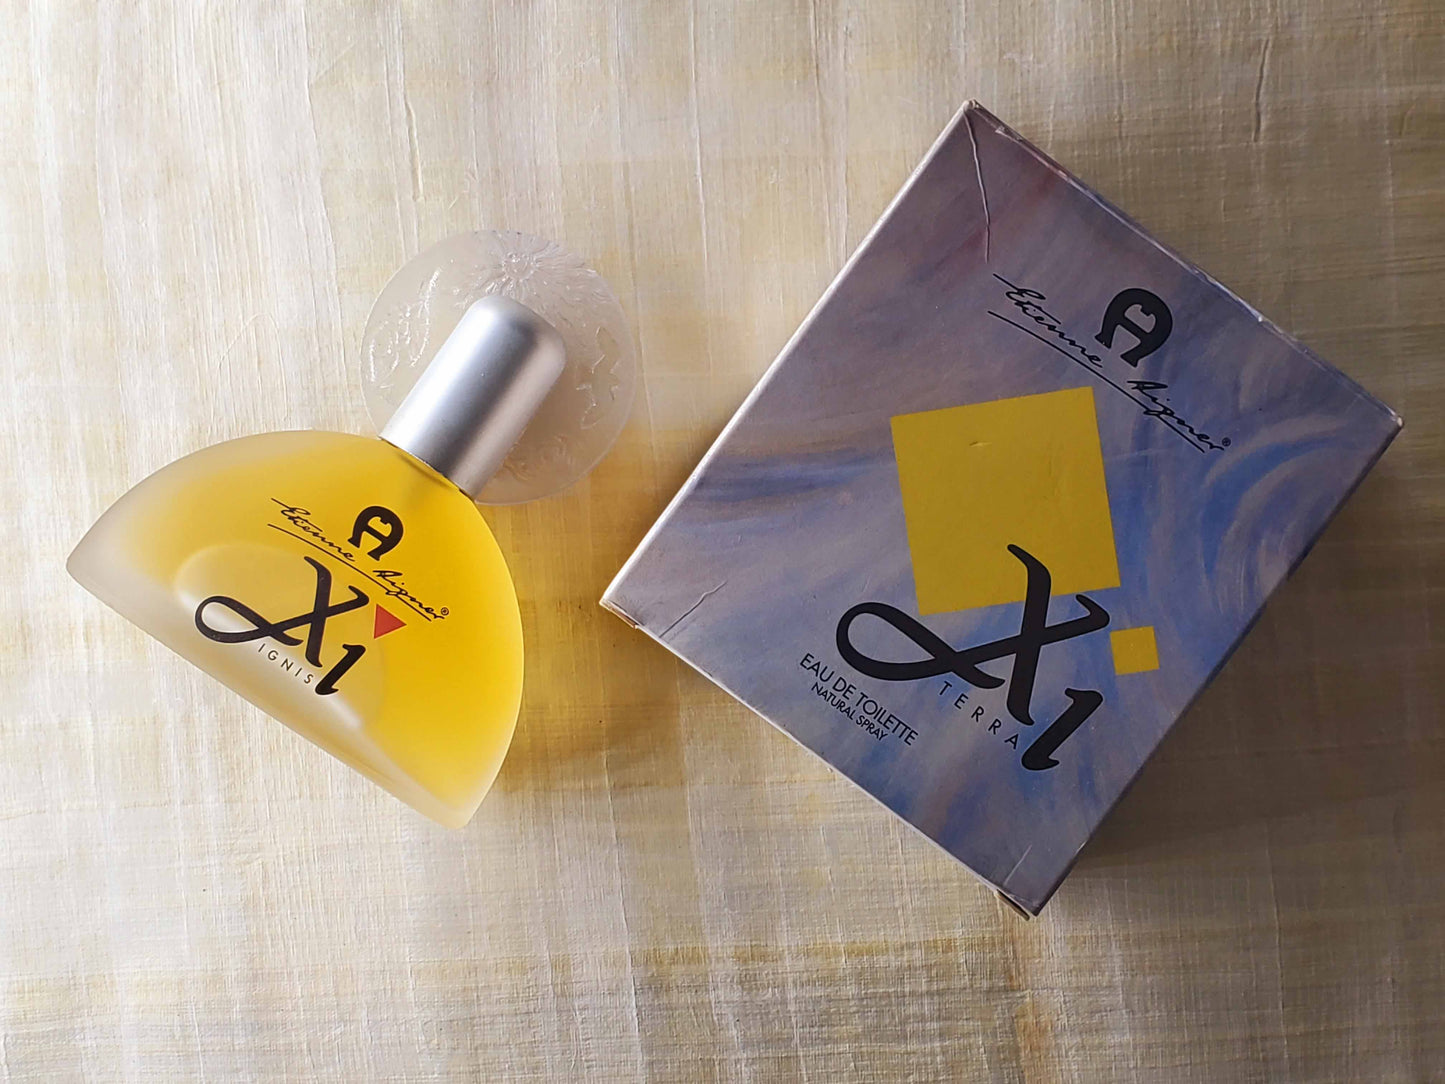 Xi Terra Etienne Aigner for Women EDT Spray 50 ml 1.7 oz, Rare, Vintage